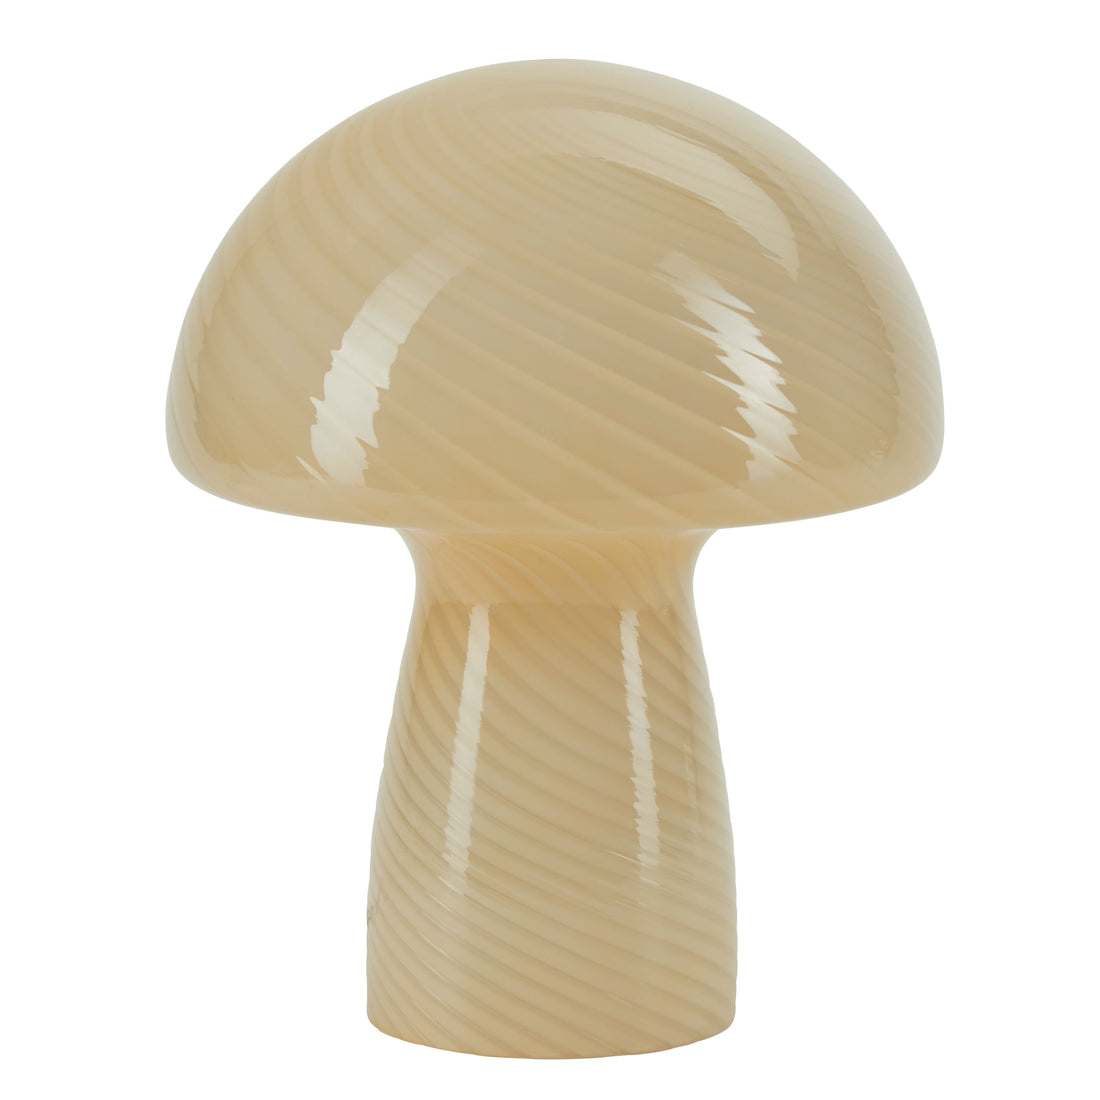 Bahne - Svampelampe / Mushroom bordlampe, creme - H23 cm.